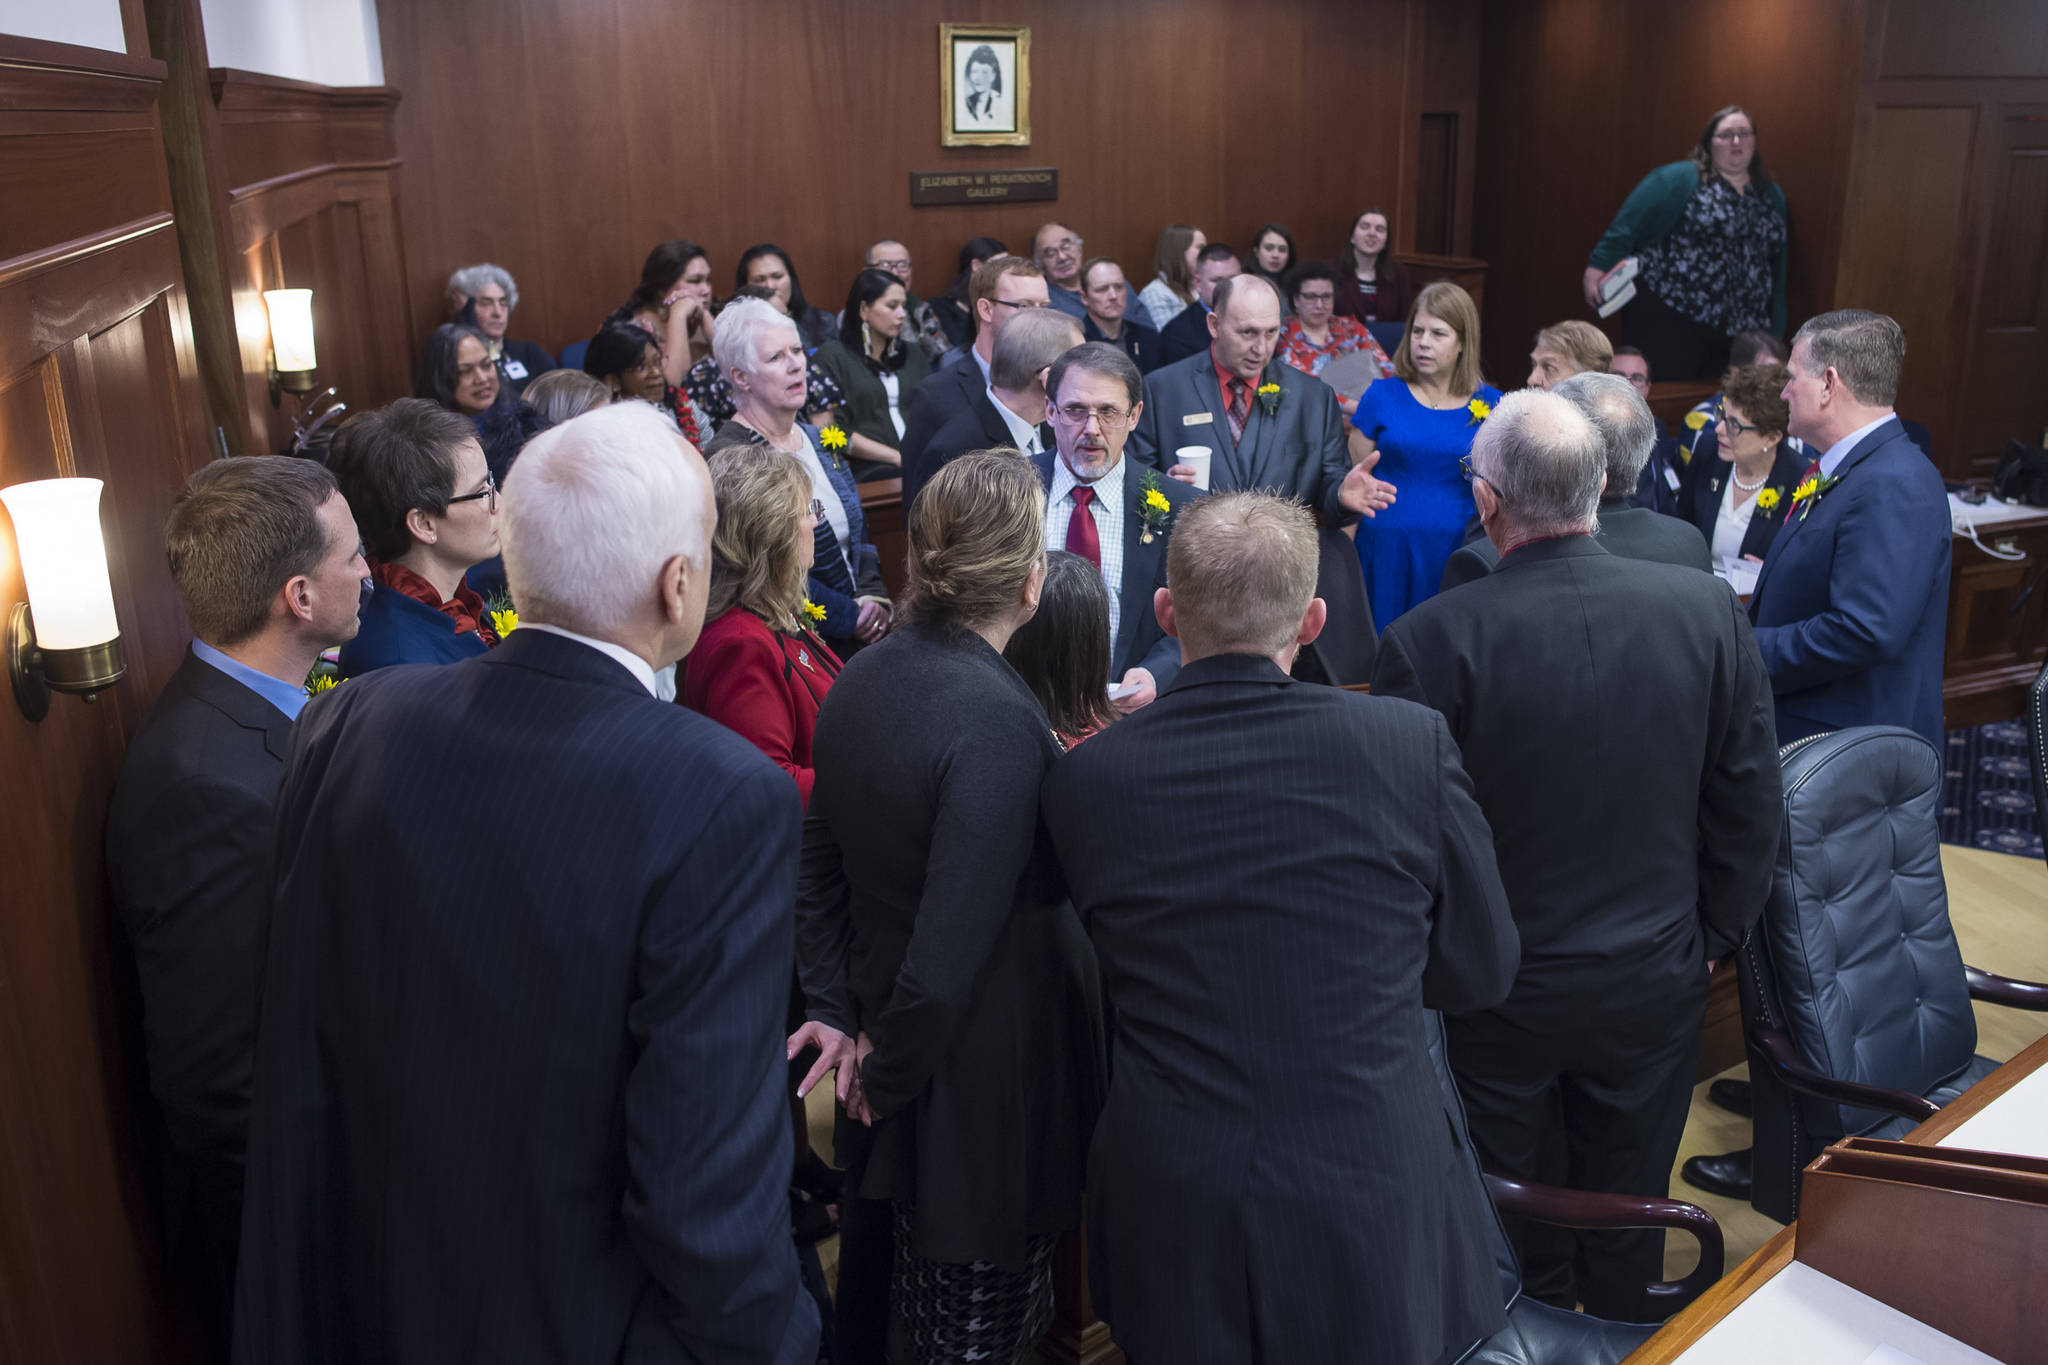 Effort to move legislative sessions to Anchorage overcomes hurdle